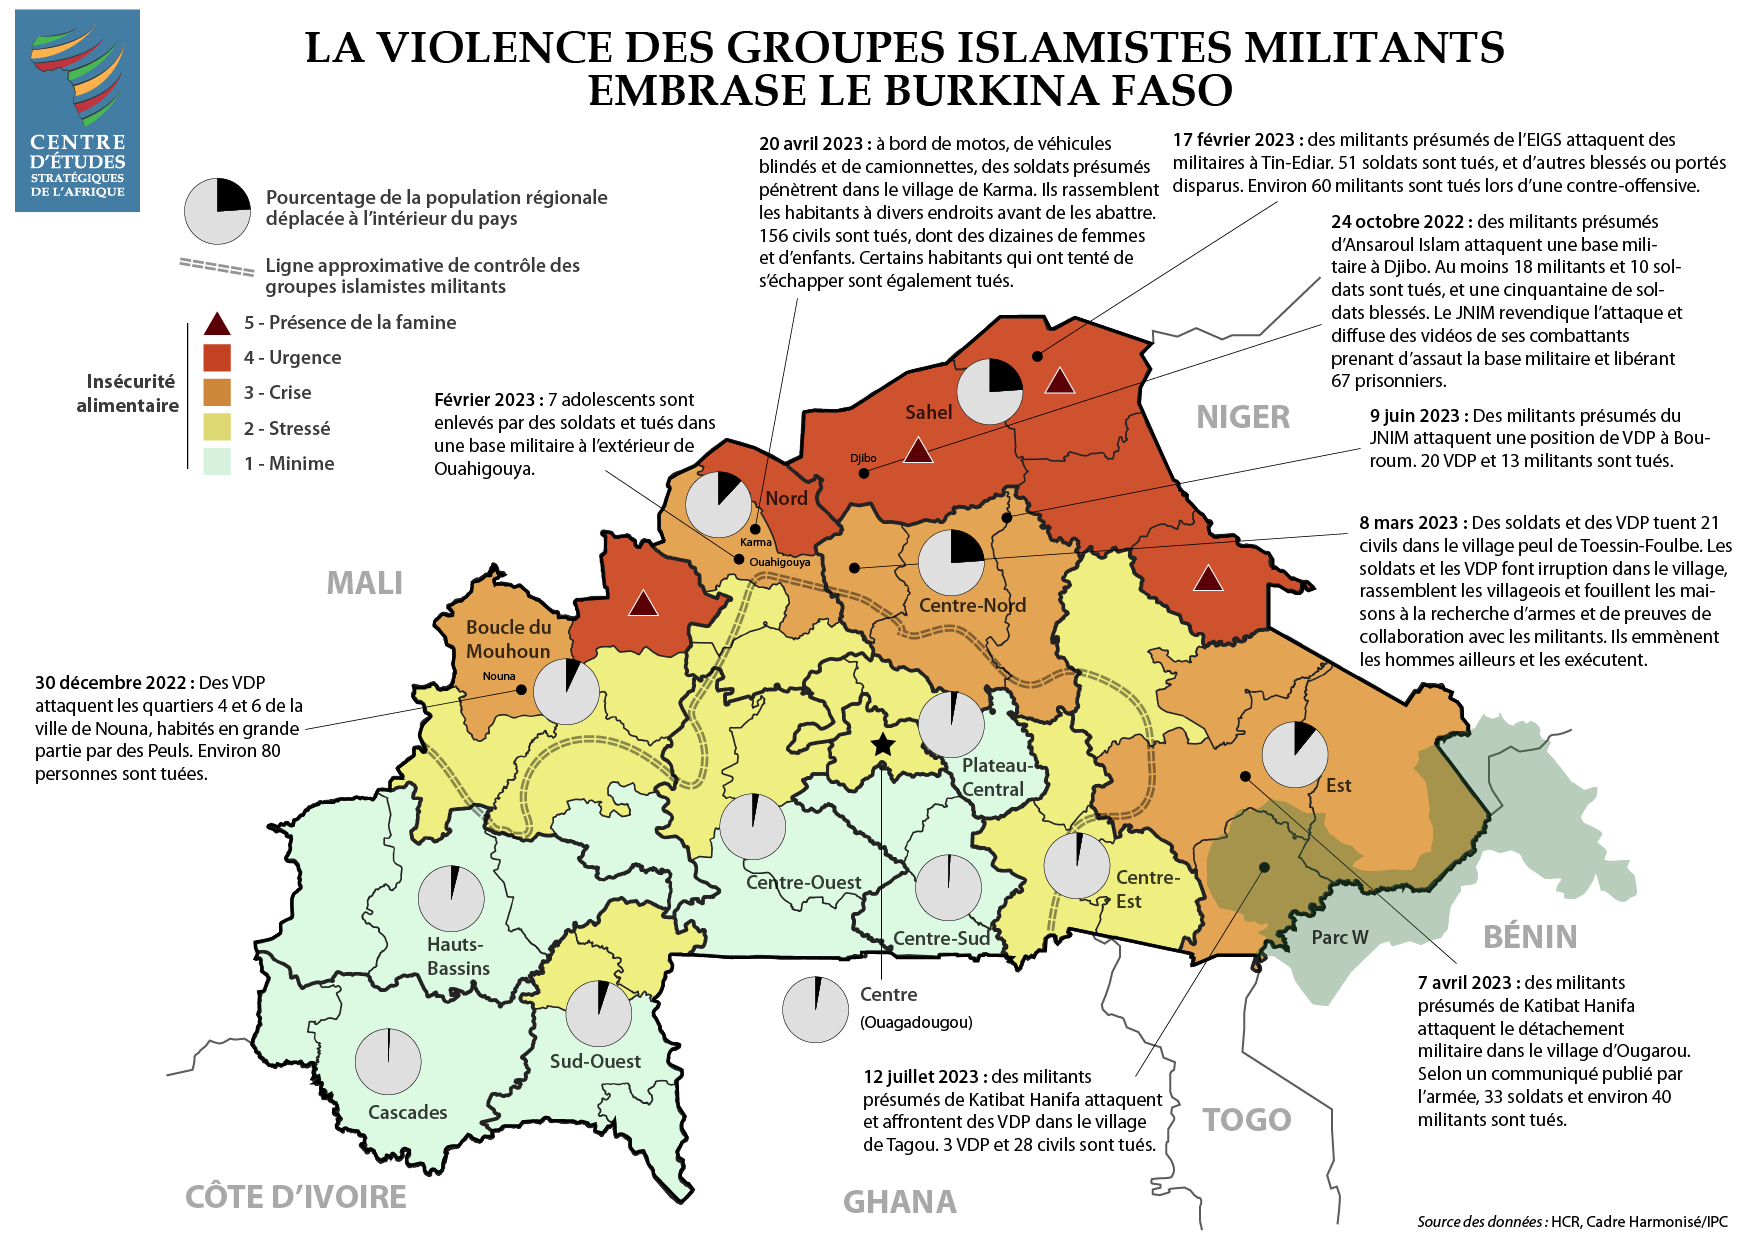 La violence des groupes islamistes militants ravage le Burkina Faso